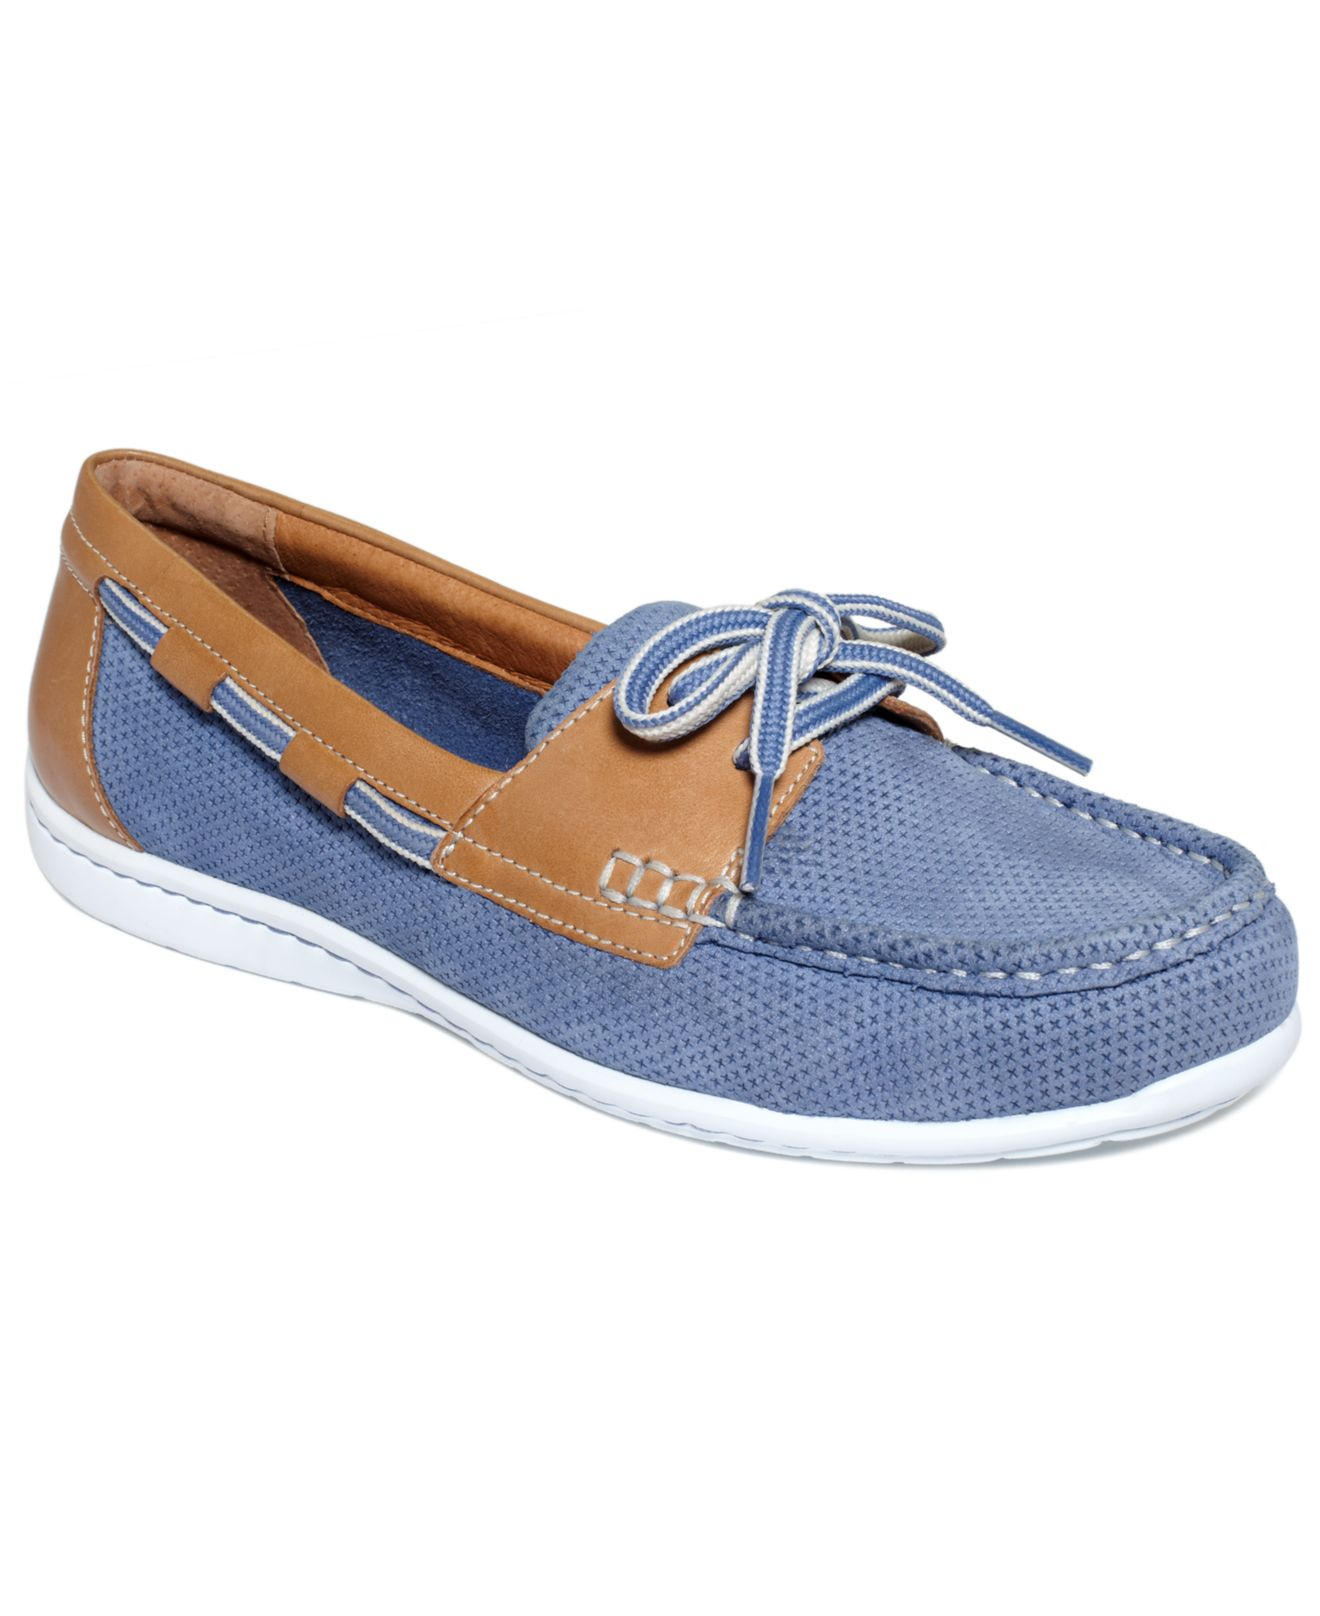 Clarks Artisan Women'S Cliffrose Sail Boat Shoes in Blue